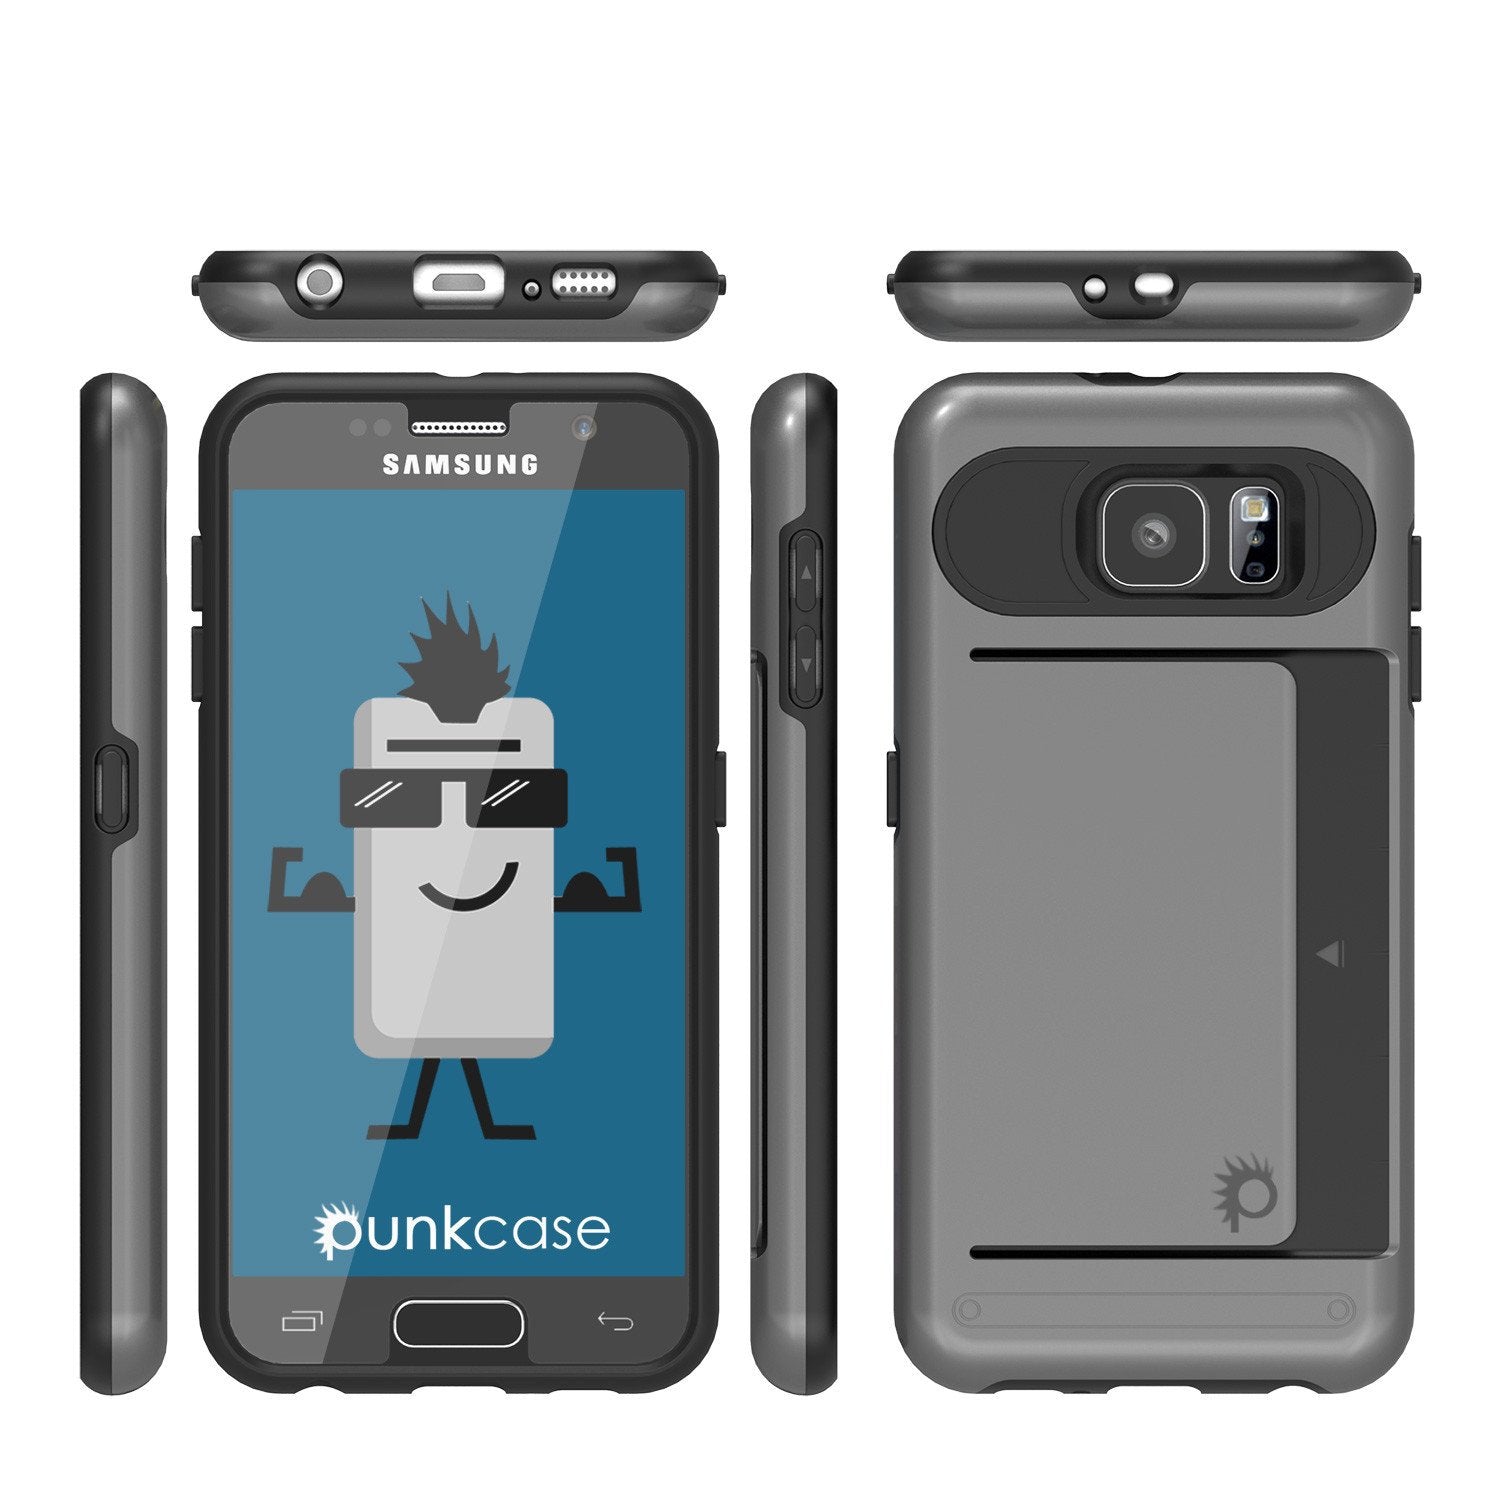 Galaxy S6 EDGE Plus Case PunkCase CLUTCH Grey Series Slim Armor Soft Cover Case w/ Screen Protector - PunkCase NZ